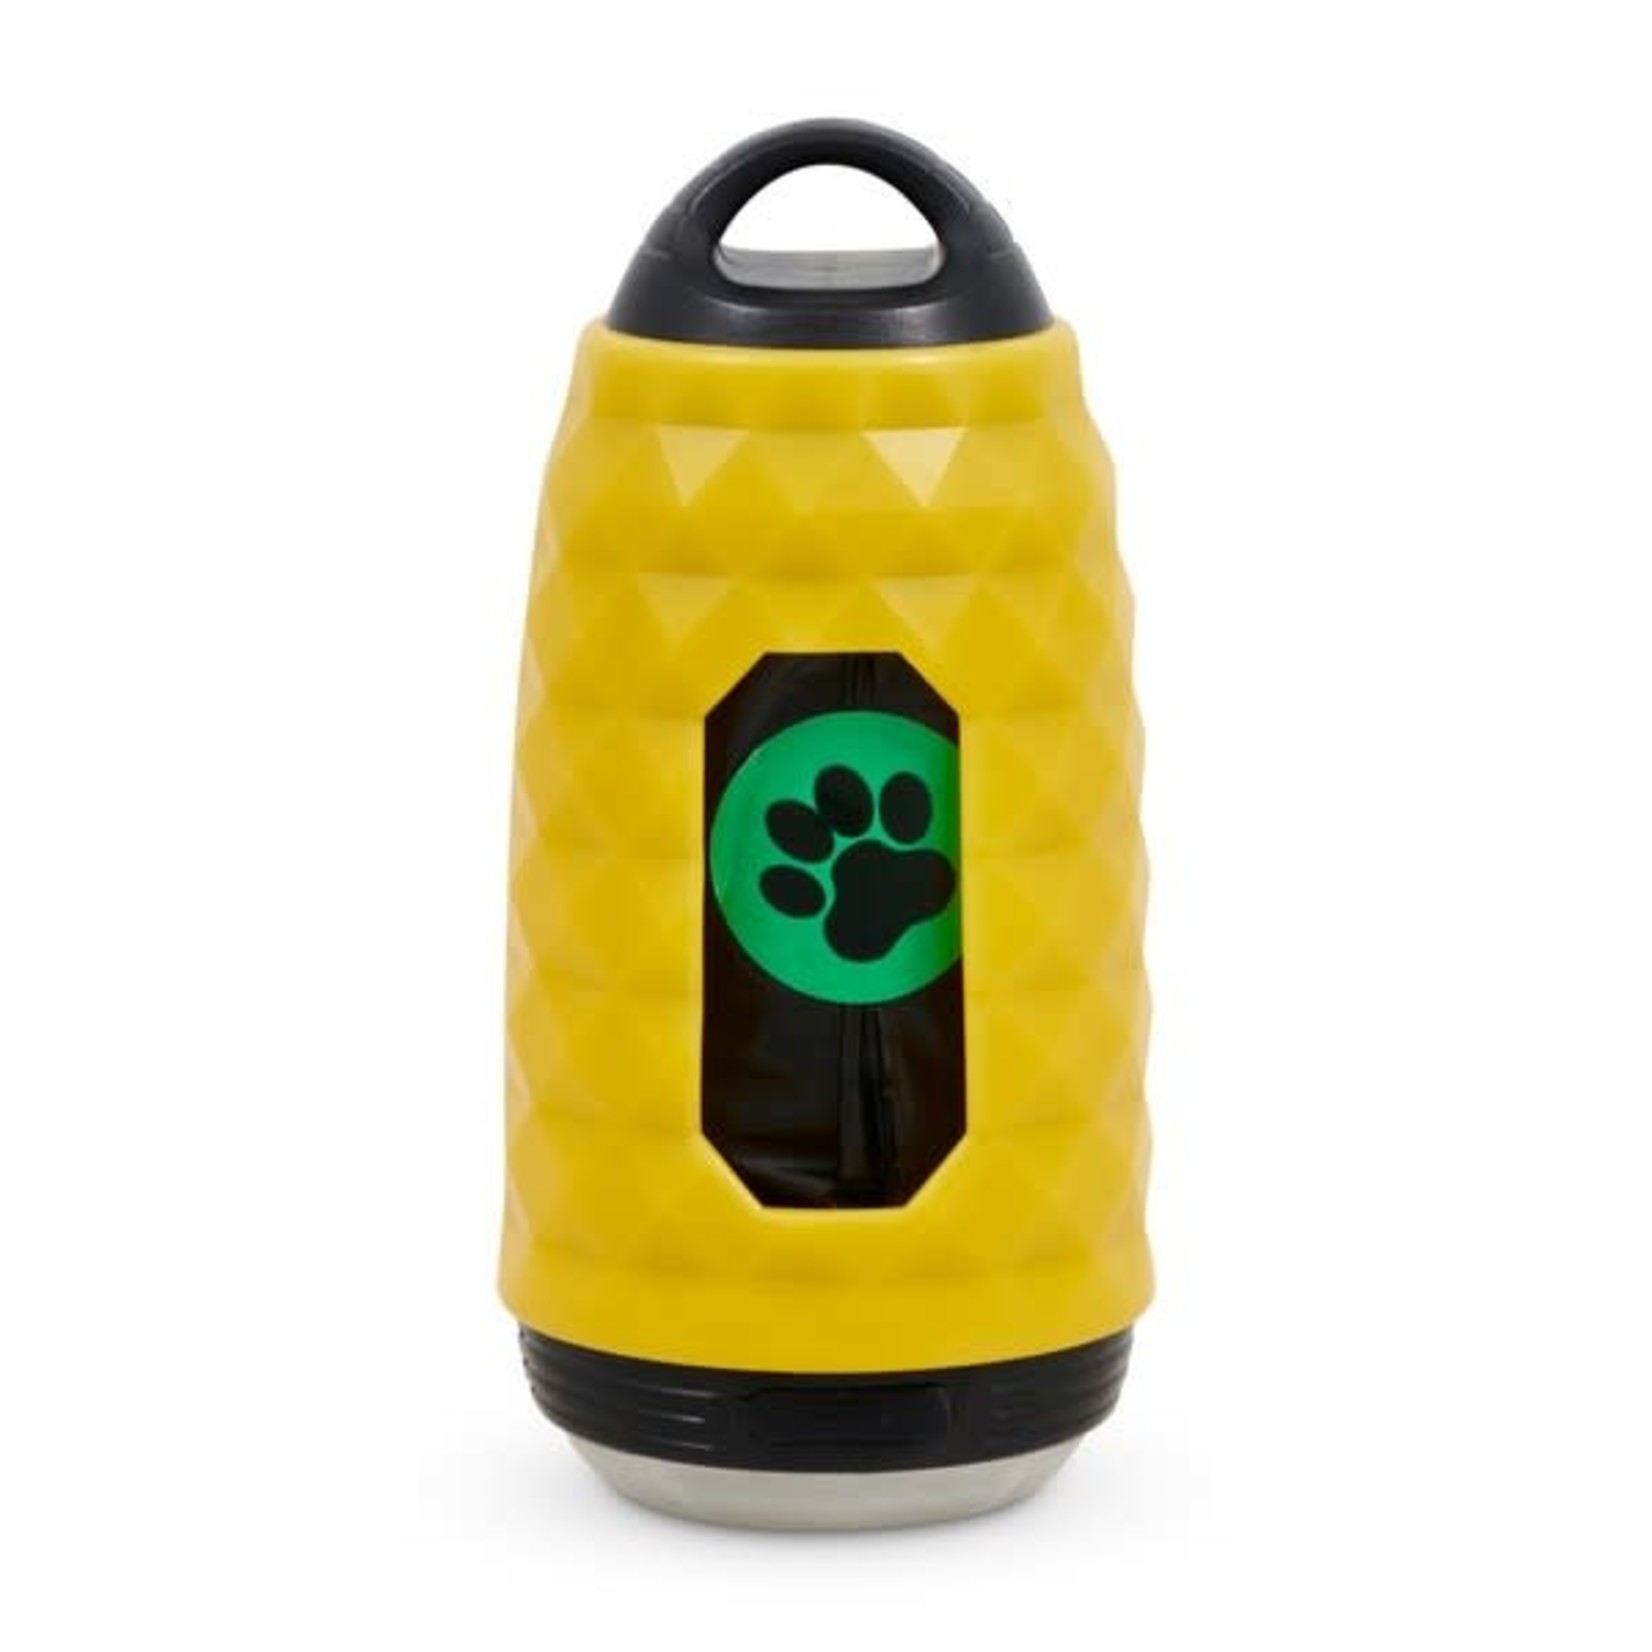 Animal Instincts Flashing Safety Poop Bag Holder & Torch in Yellow